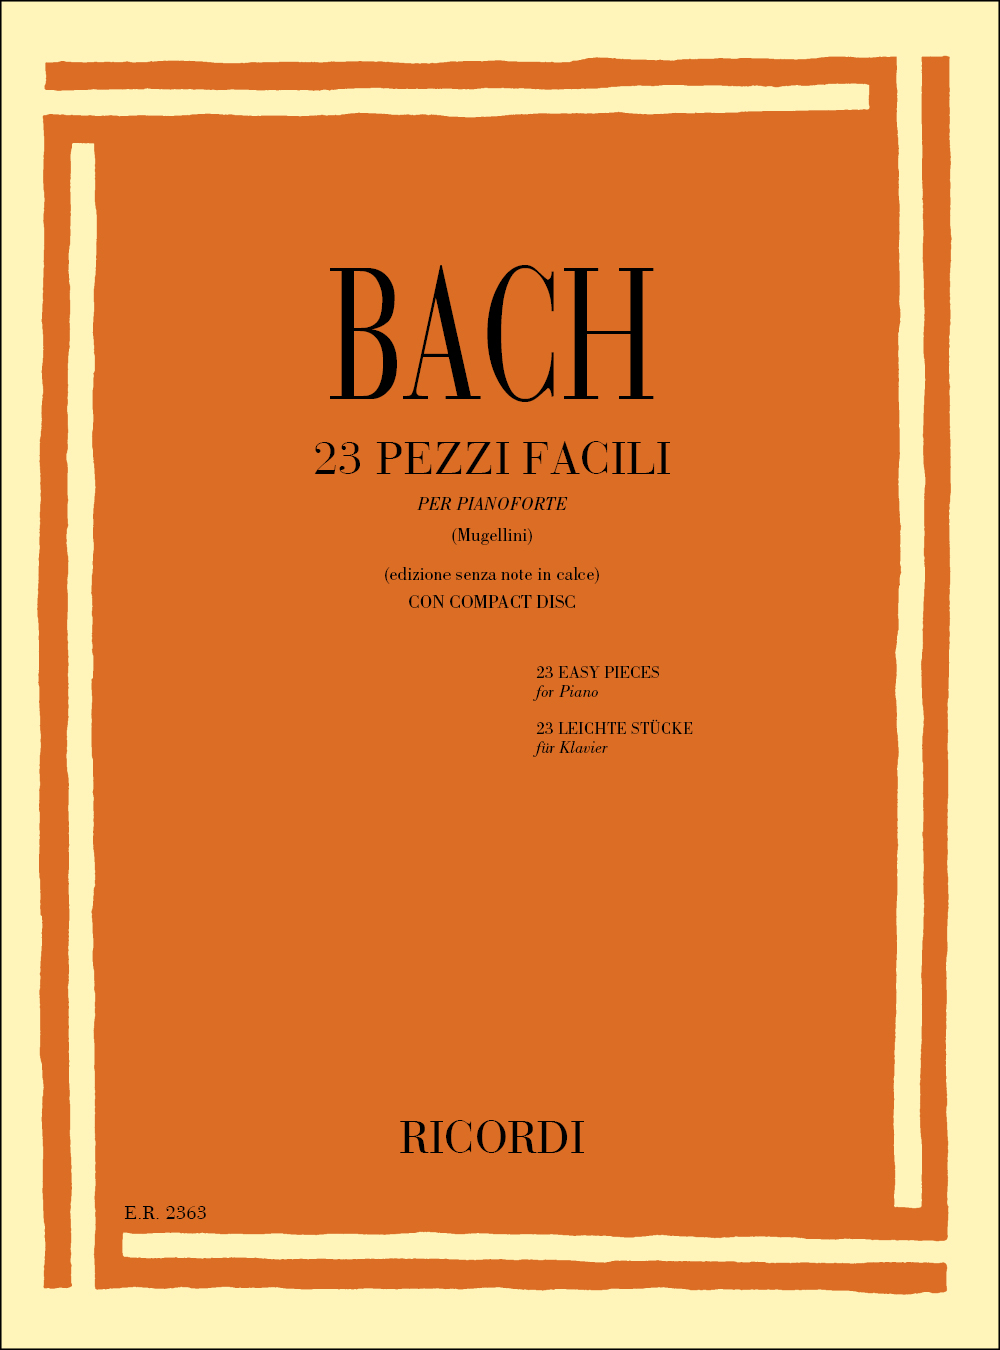 Johann Sebastian Bach: 23 Pezzi Facili: Piano